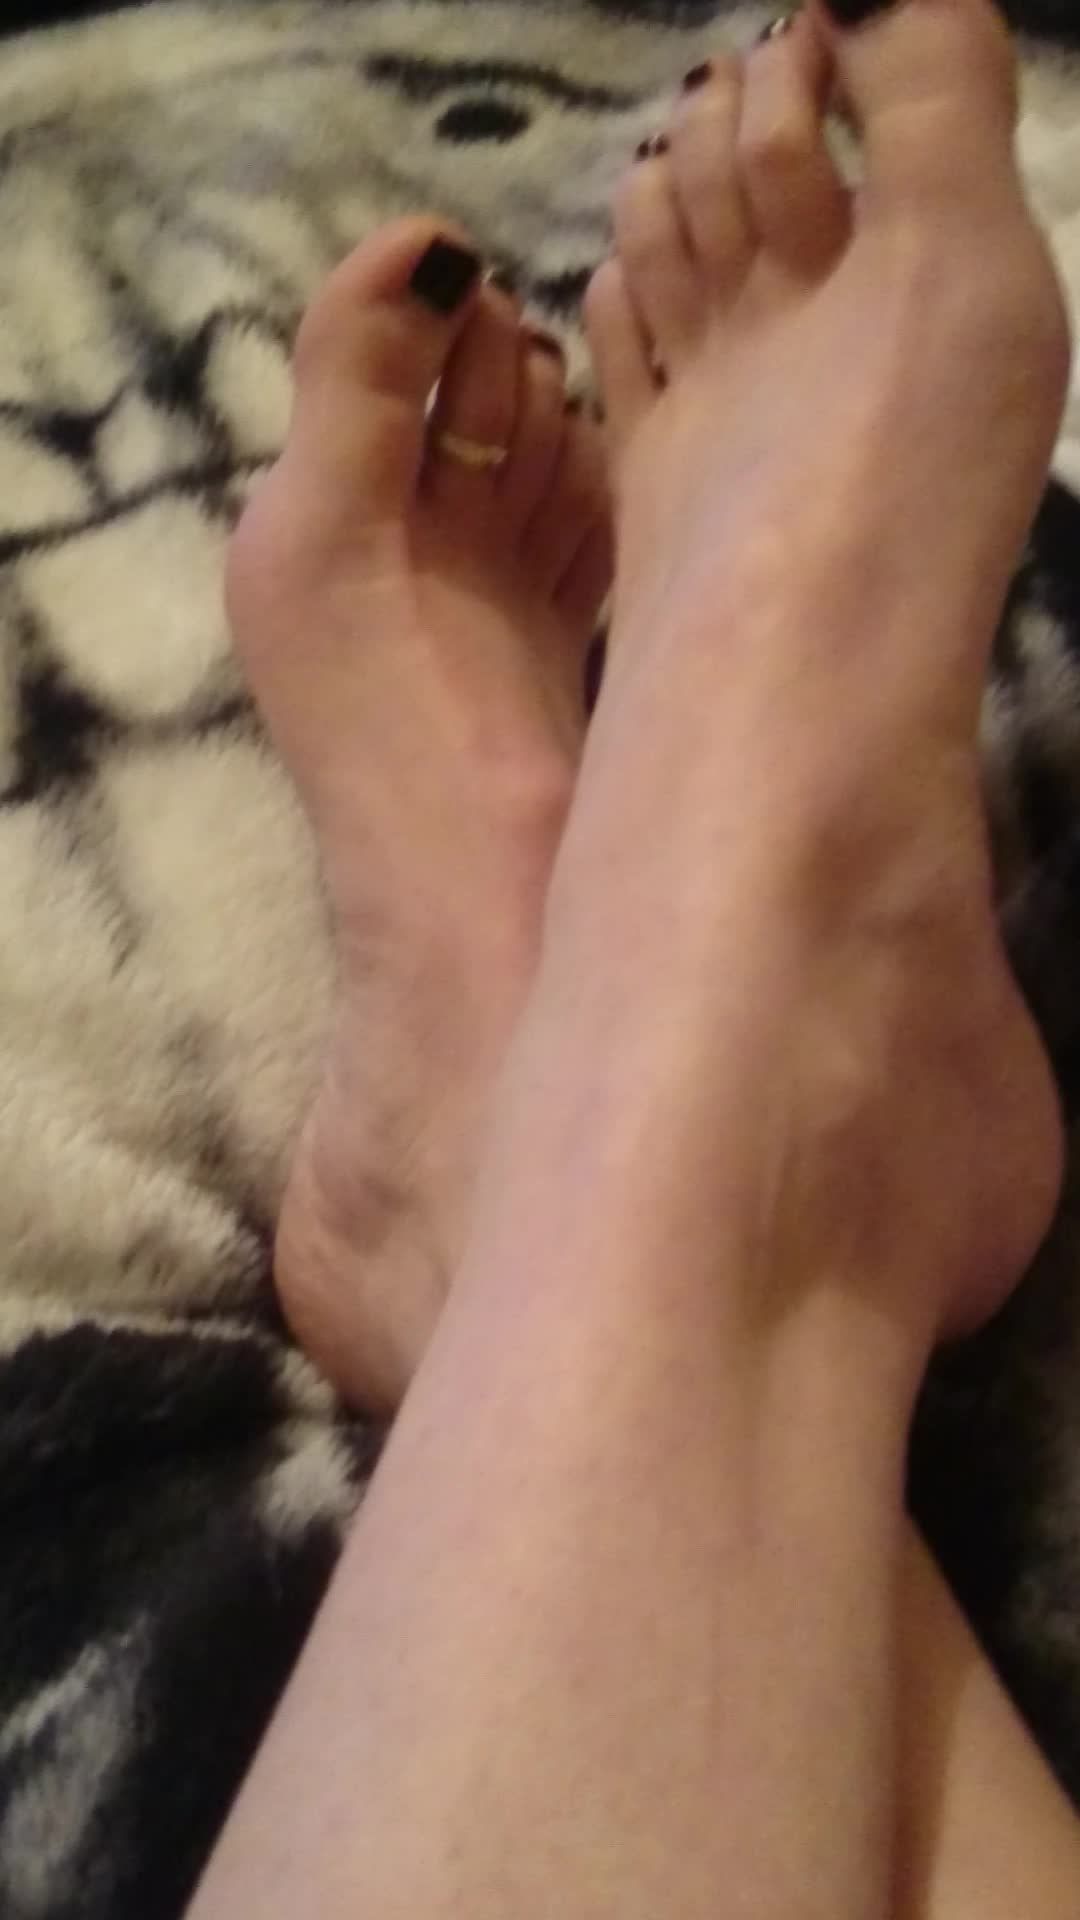 The best Feet Fetish On Here